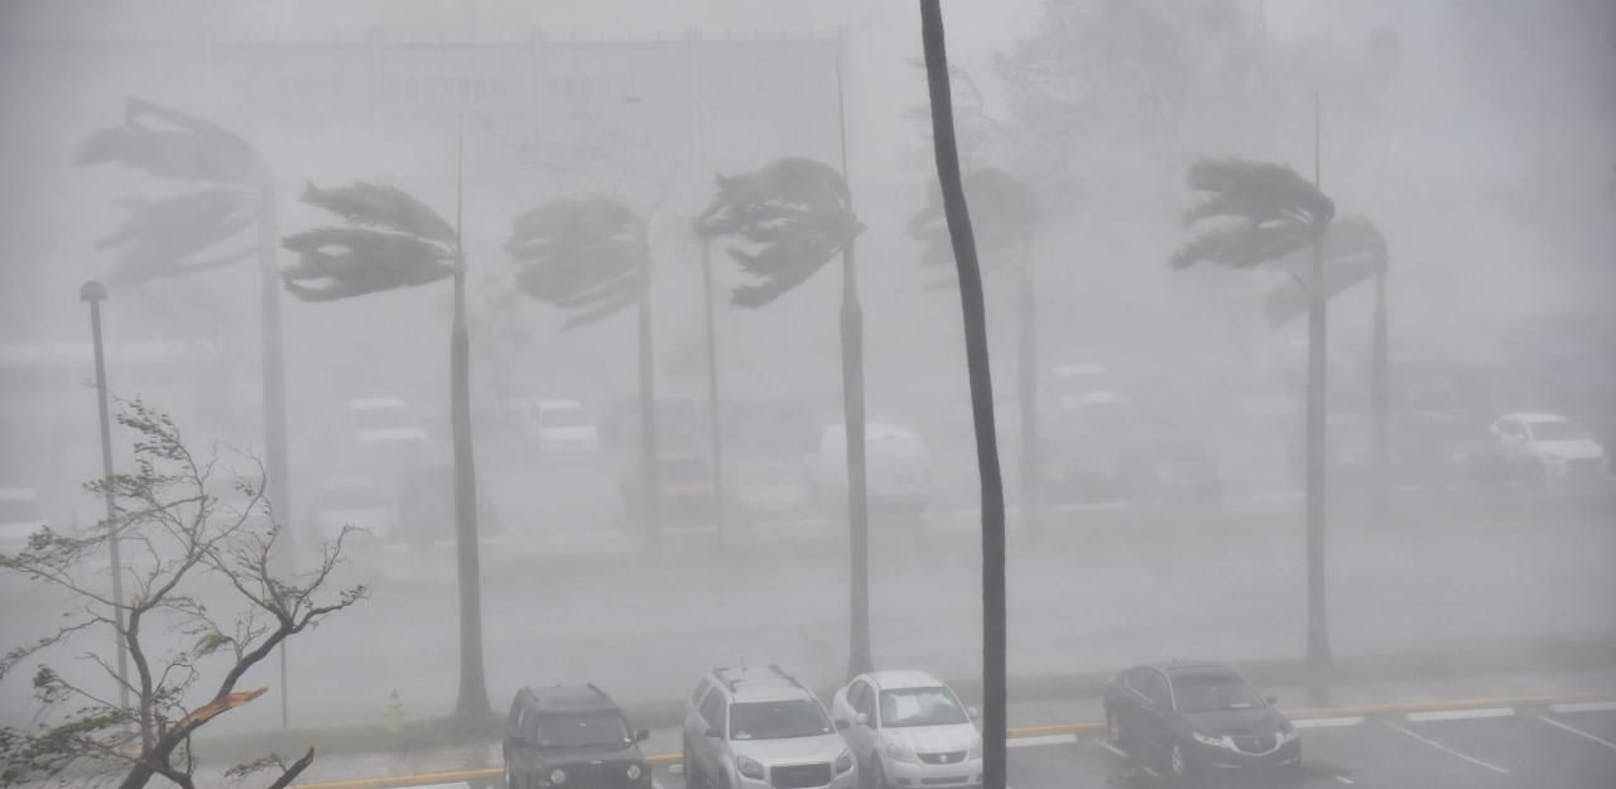 Hurrikan "Maria" erreicht Puerto Rico